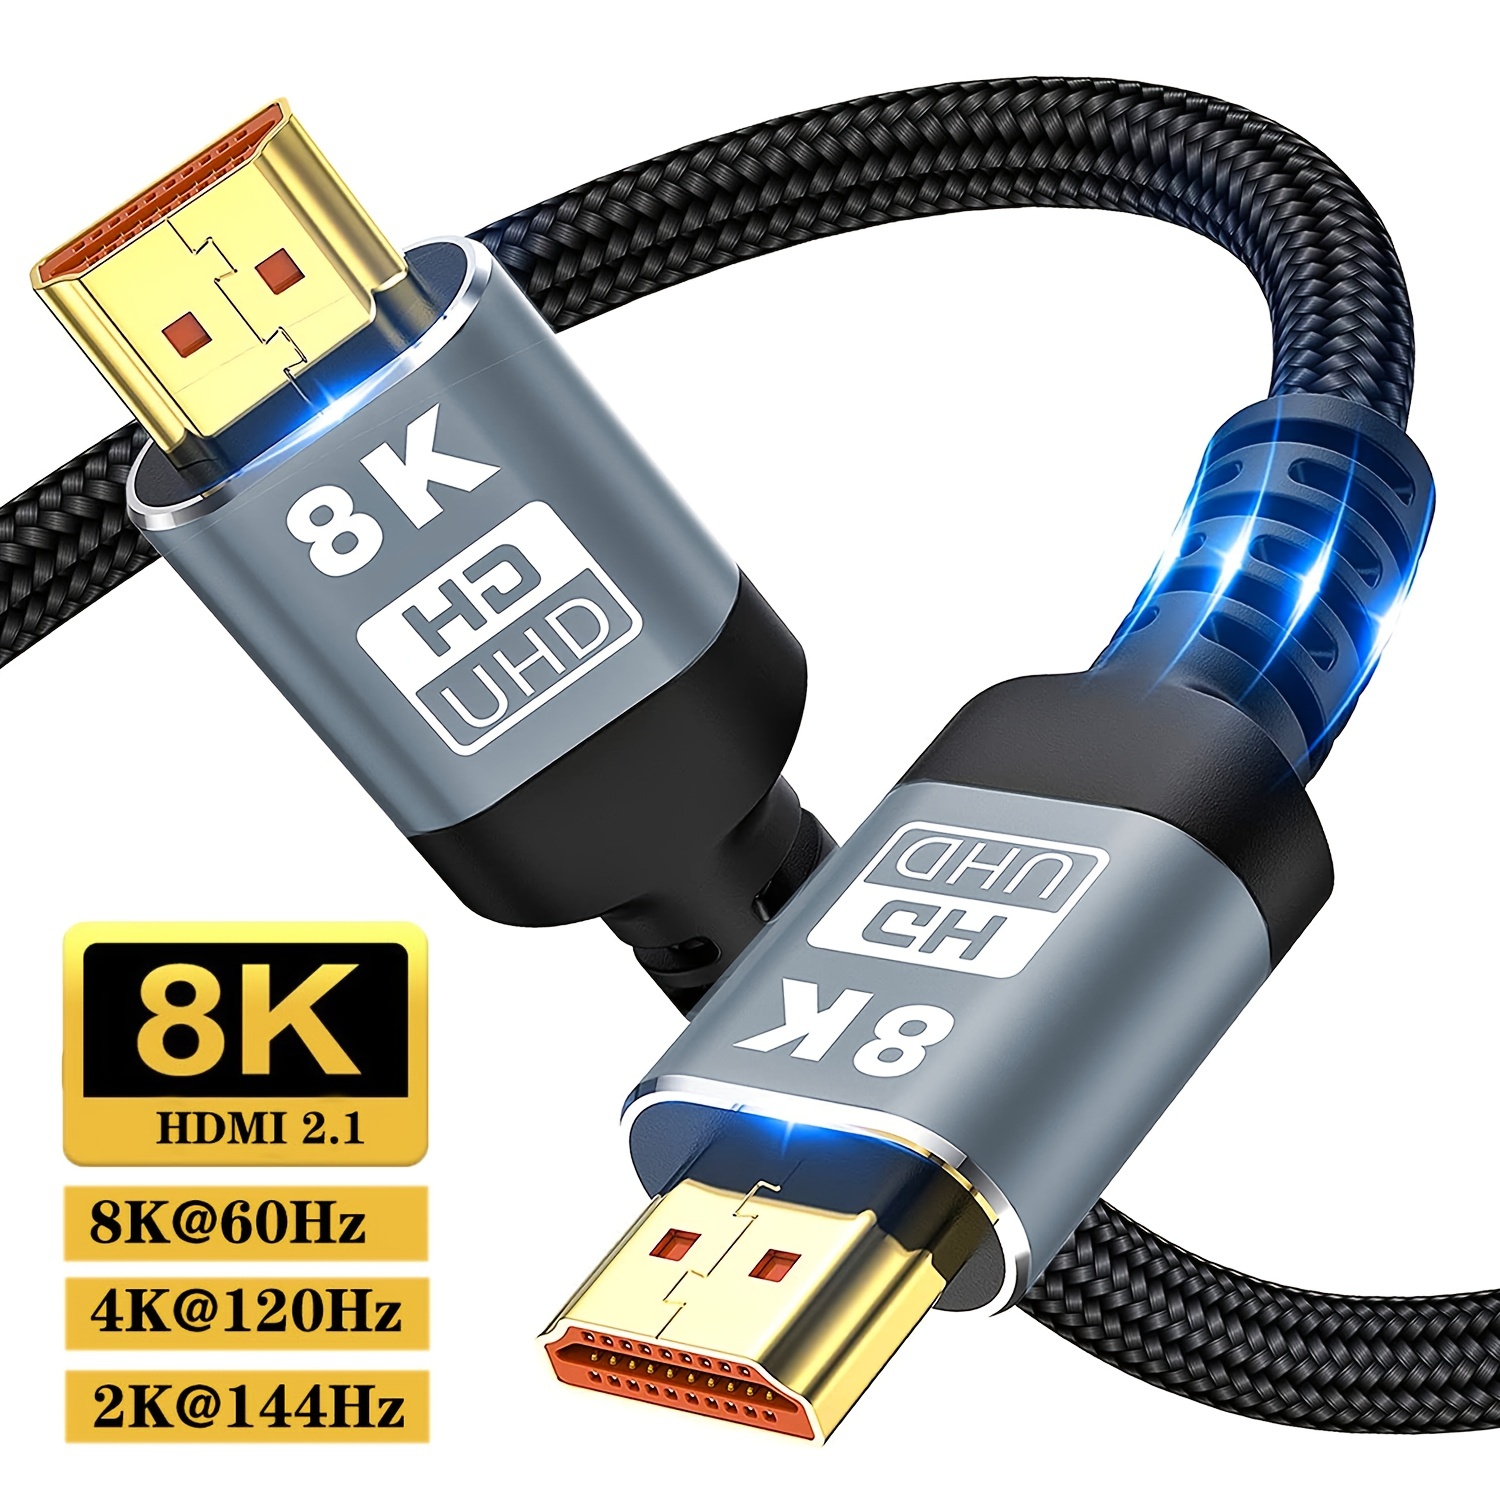 8K@60Hz HDMI Cable